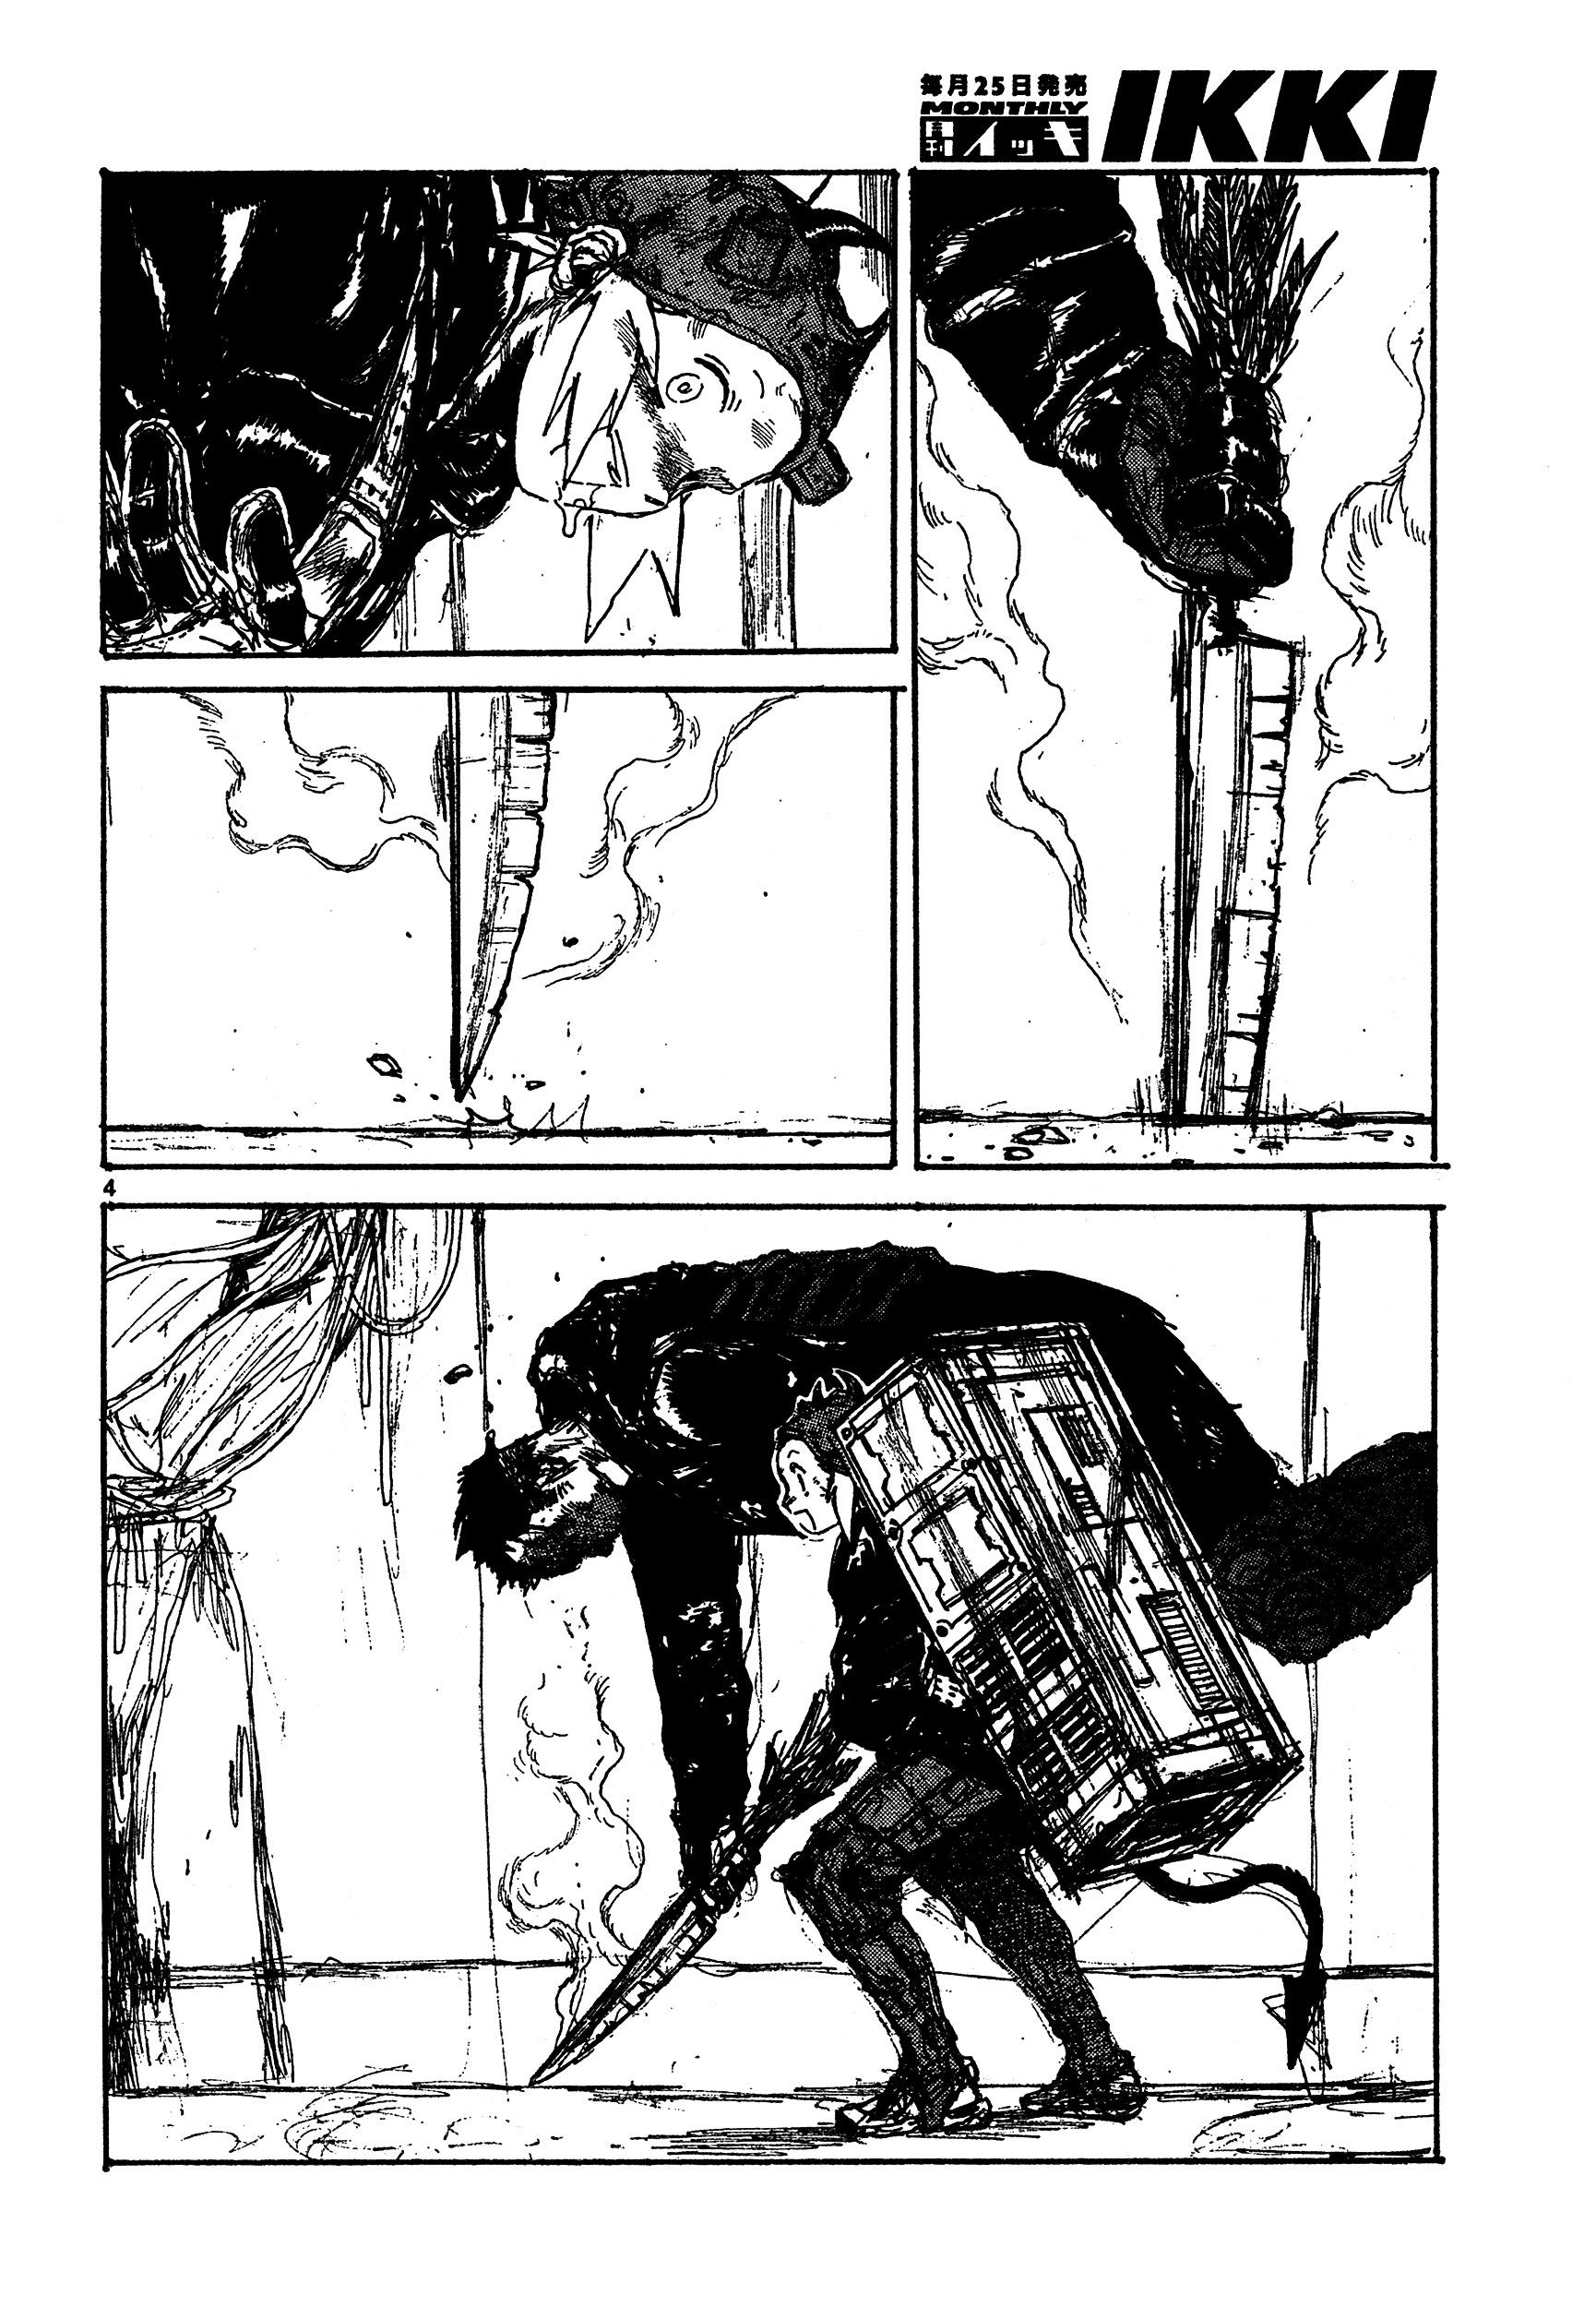 Dorohedoro Chapter 130 : Seizure Complete page 4 - Mangakakalot